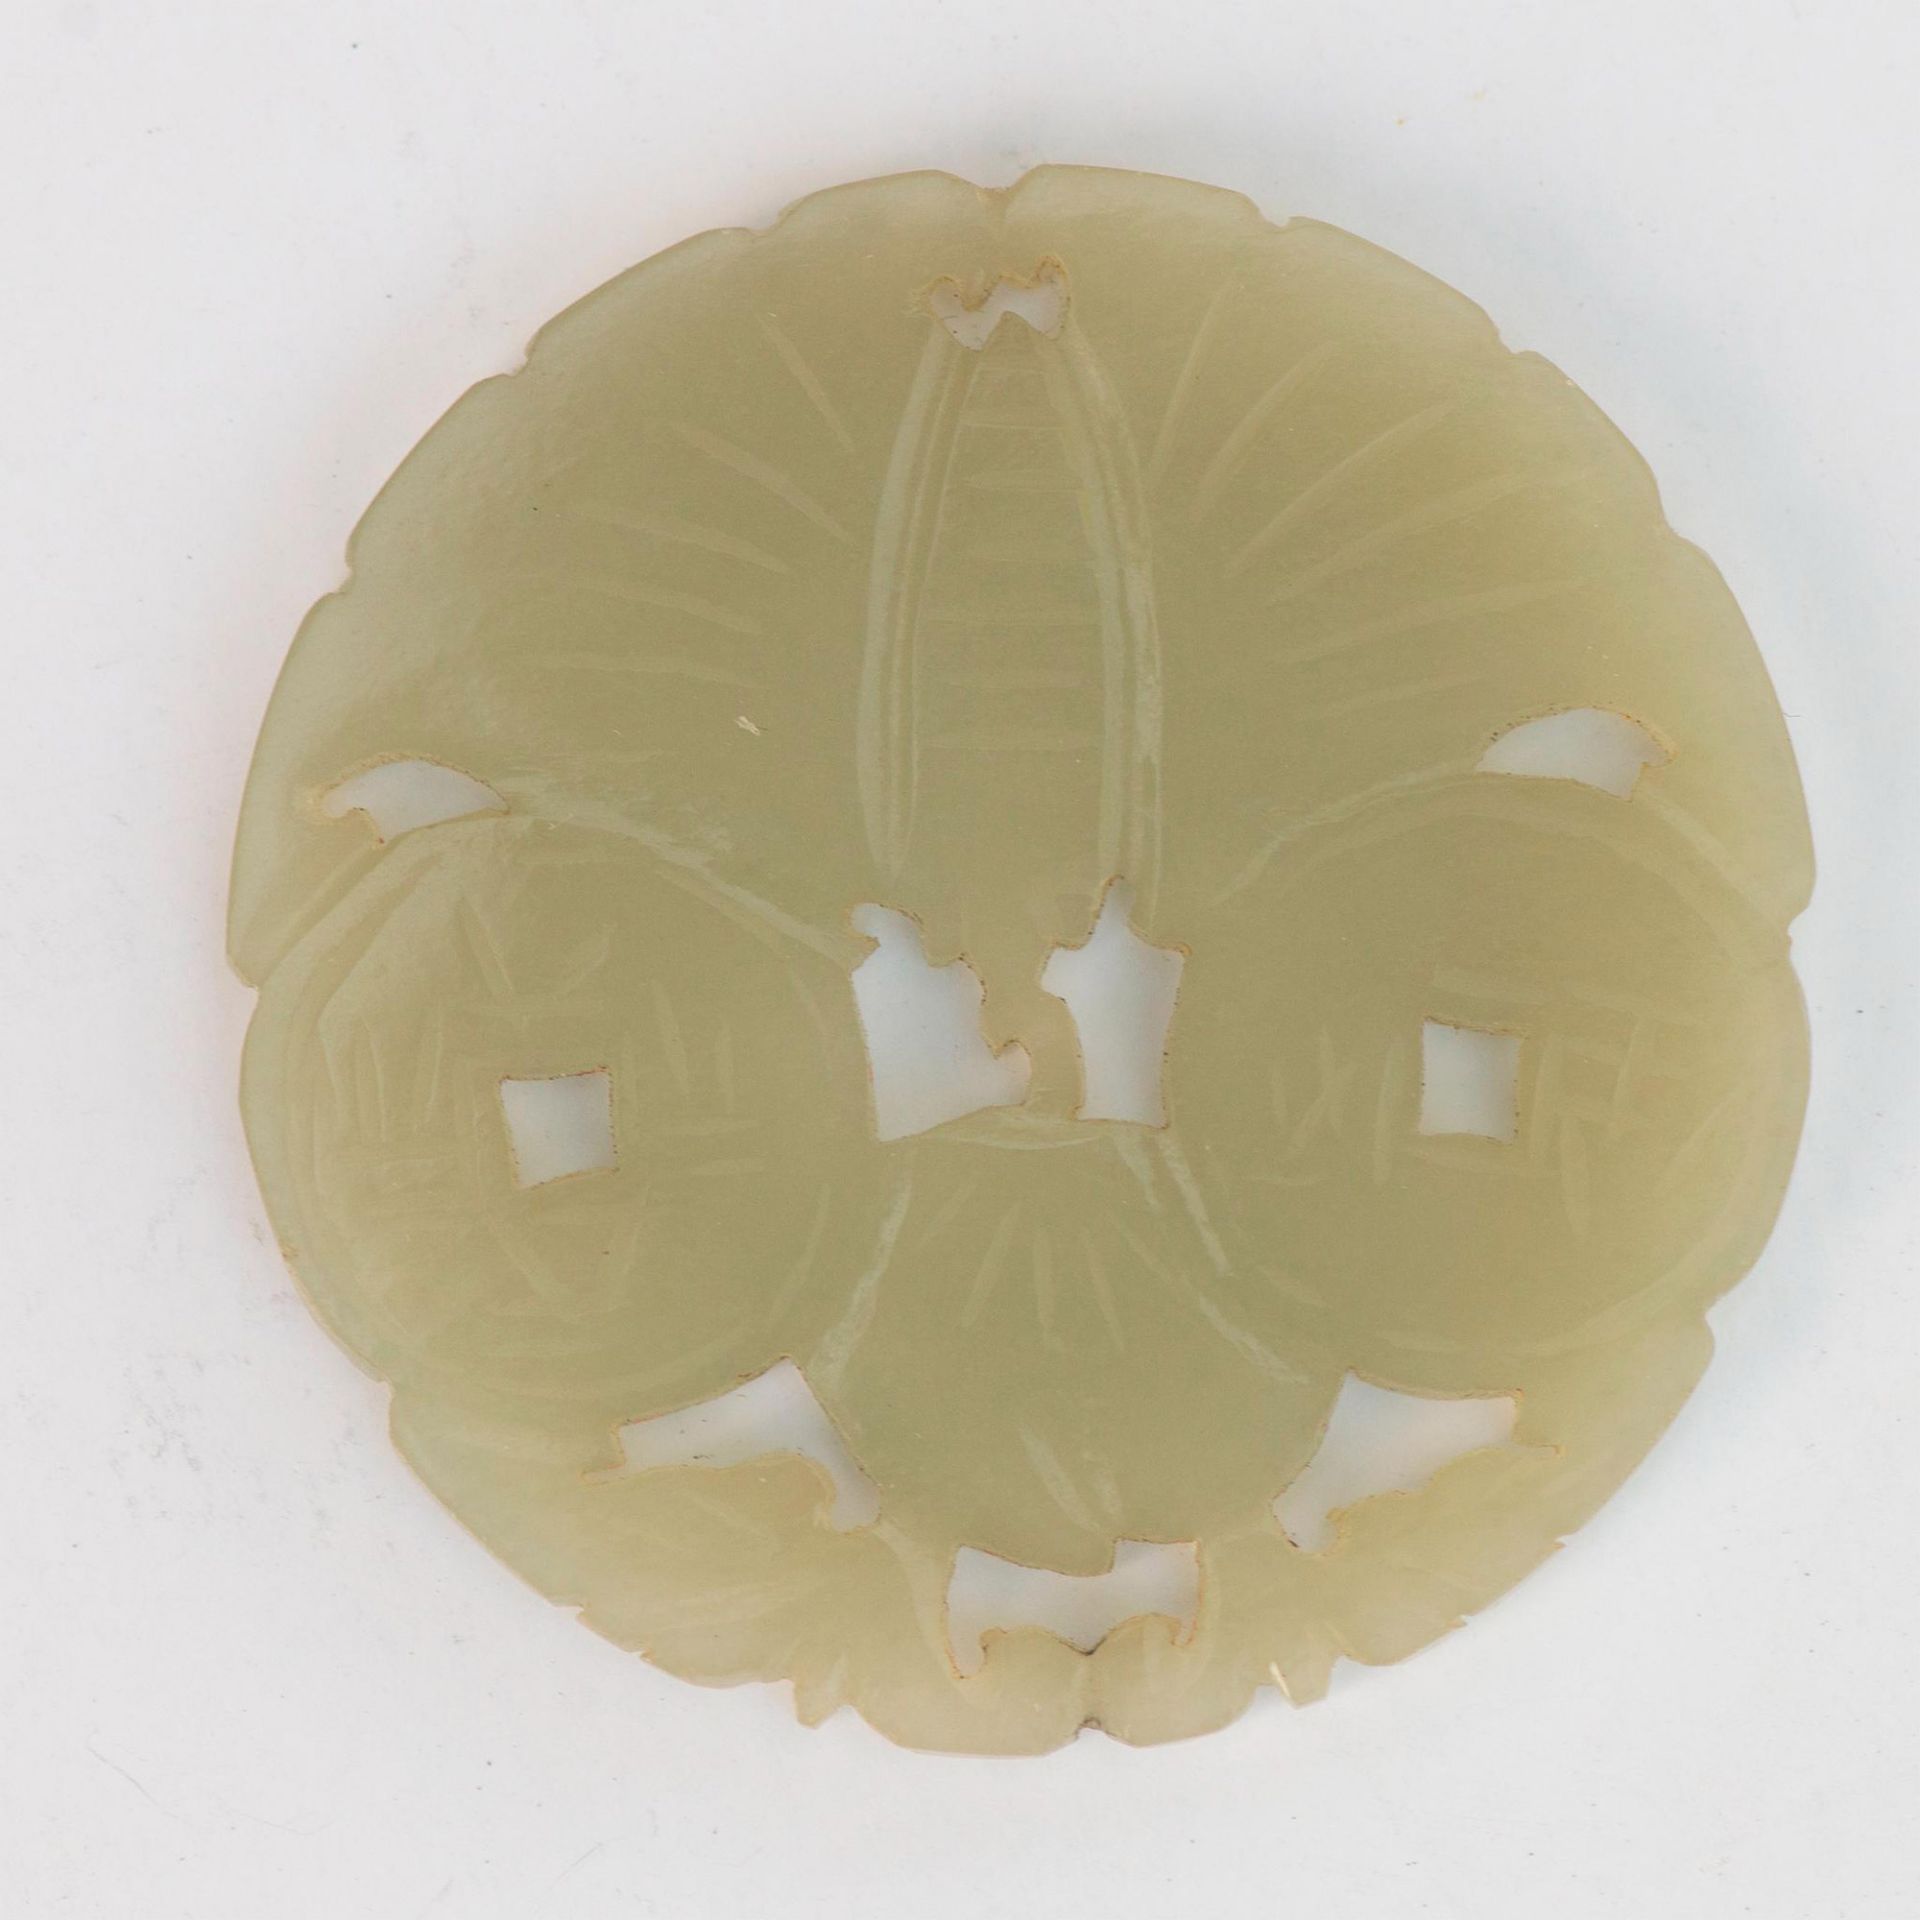 Antique Chinese Jade Pendant - Image 2 of 2